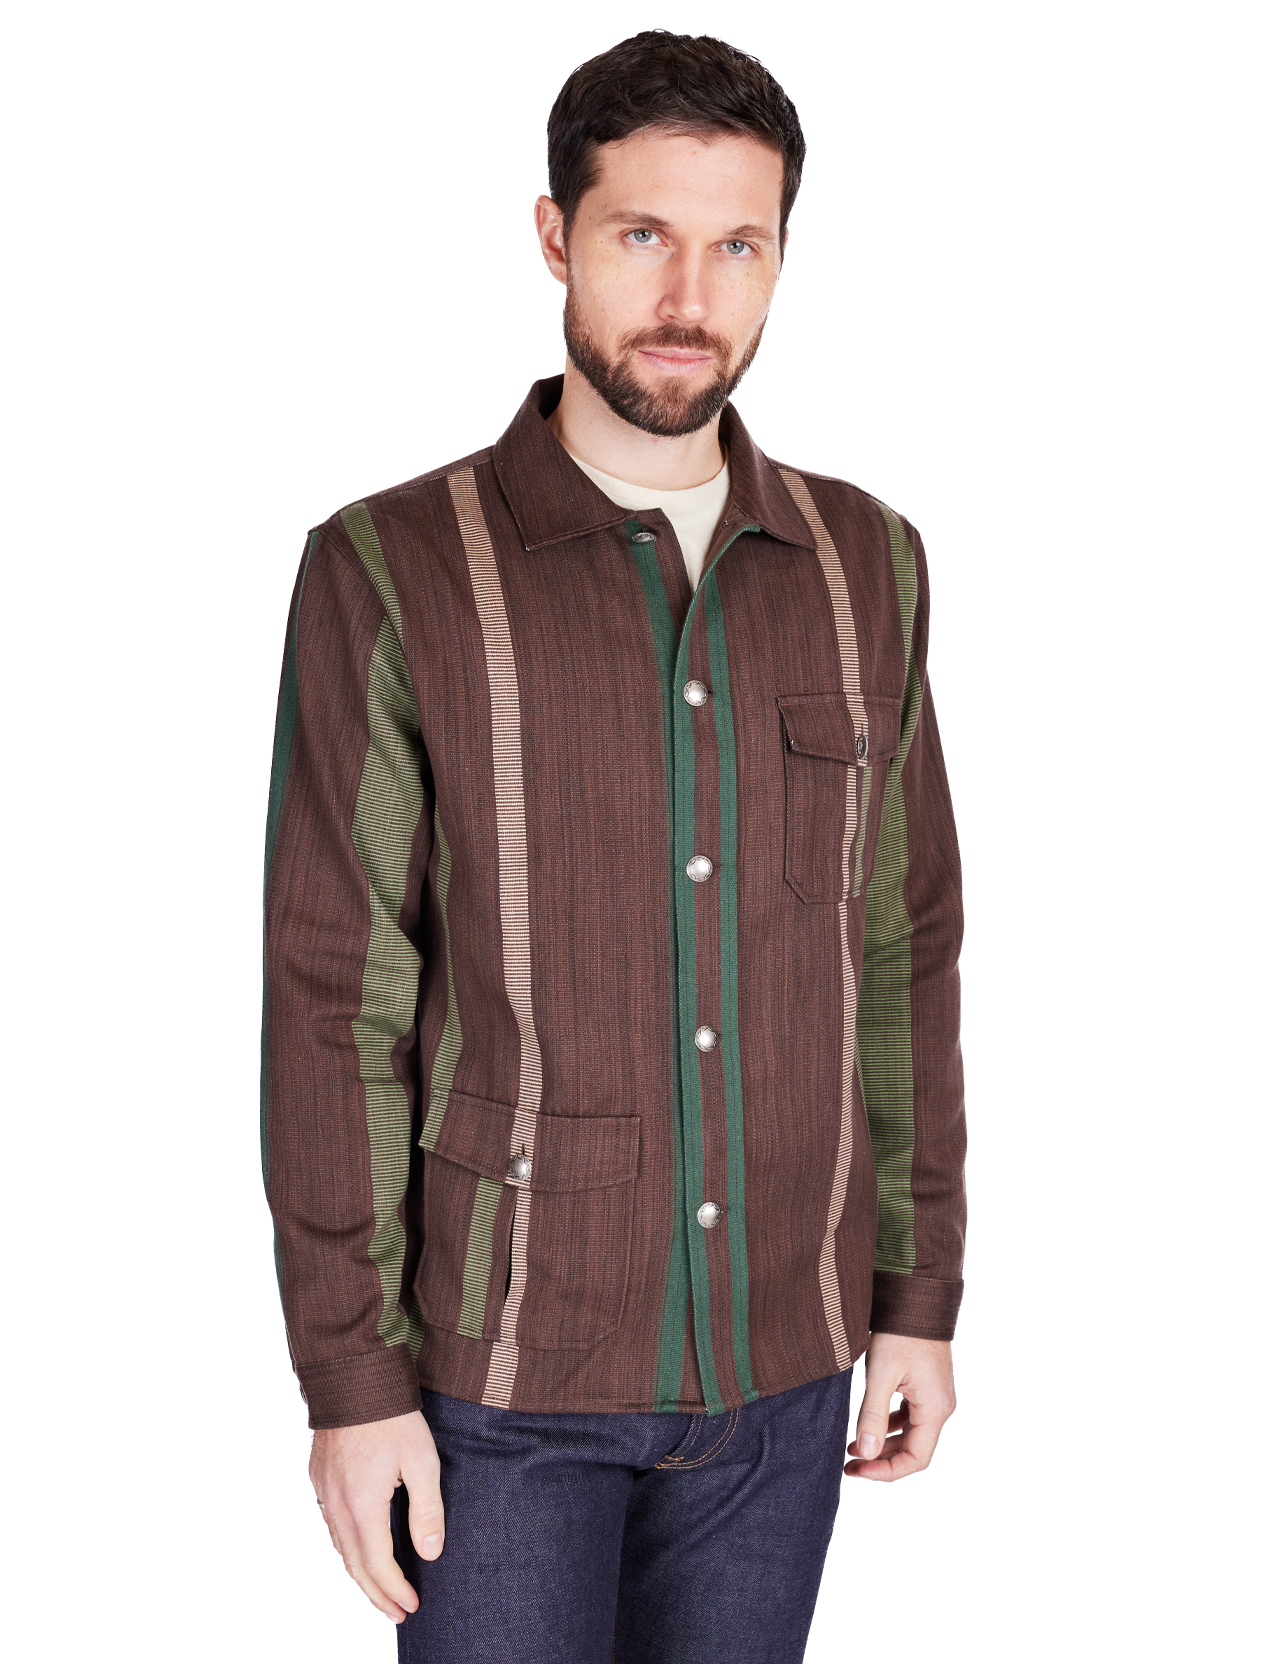 Indigofera---Conway-Shirt-Jacket-Striped---Brown-Green-12